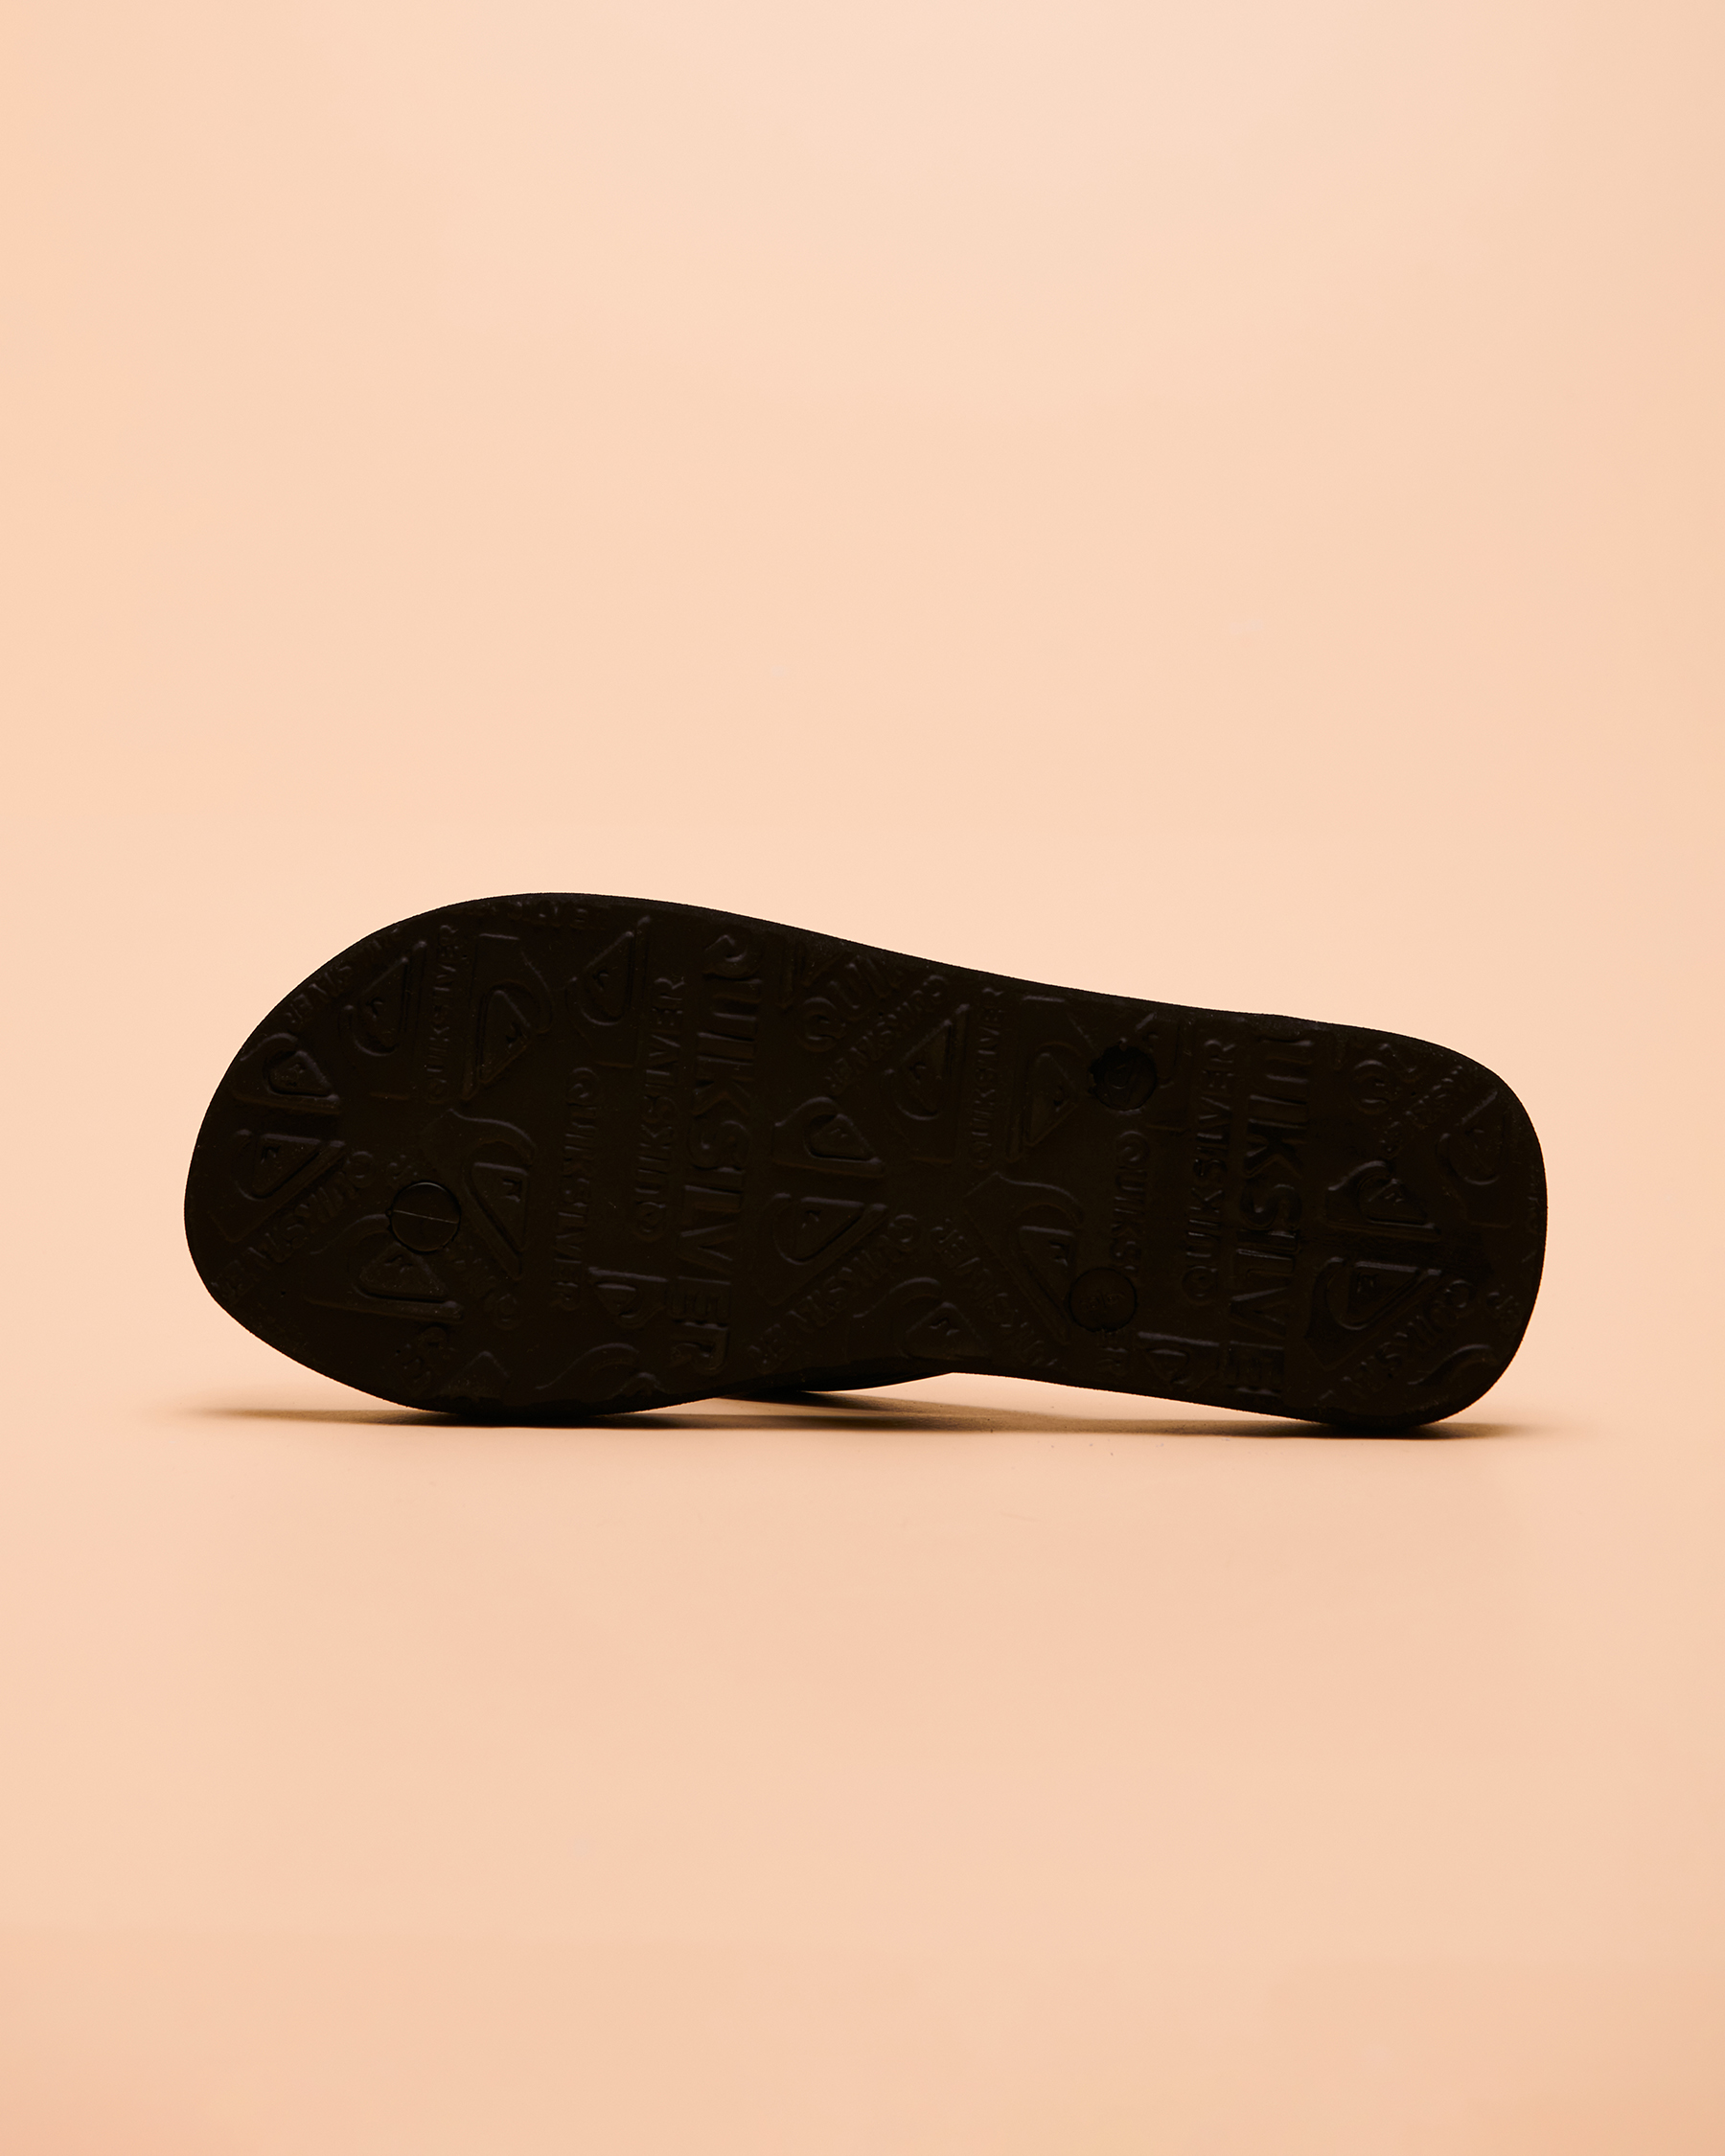 QUIKSILVER MOLOKAI SLAB Sandal Black AQYL101200 - View5